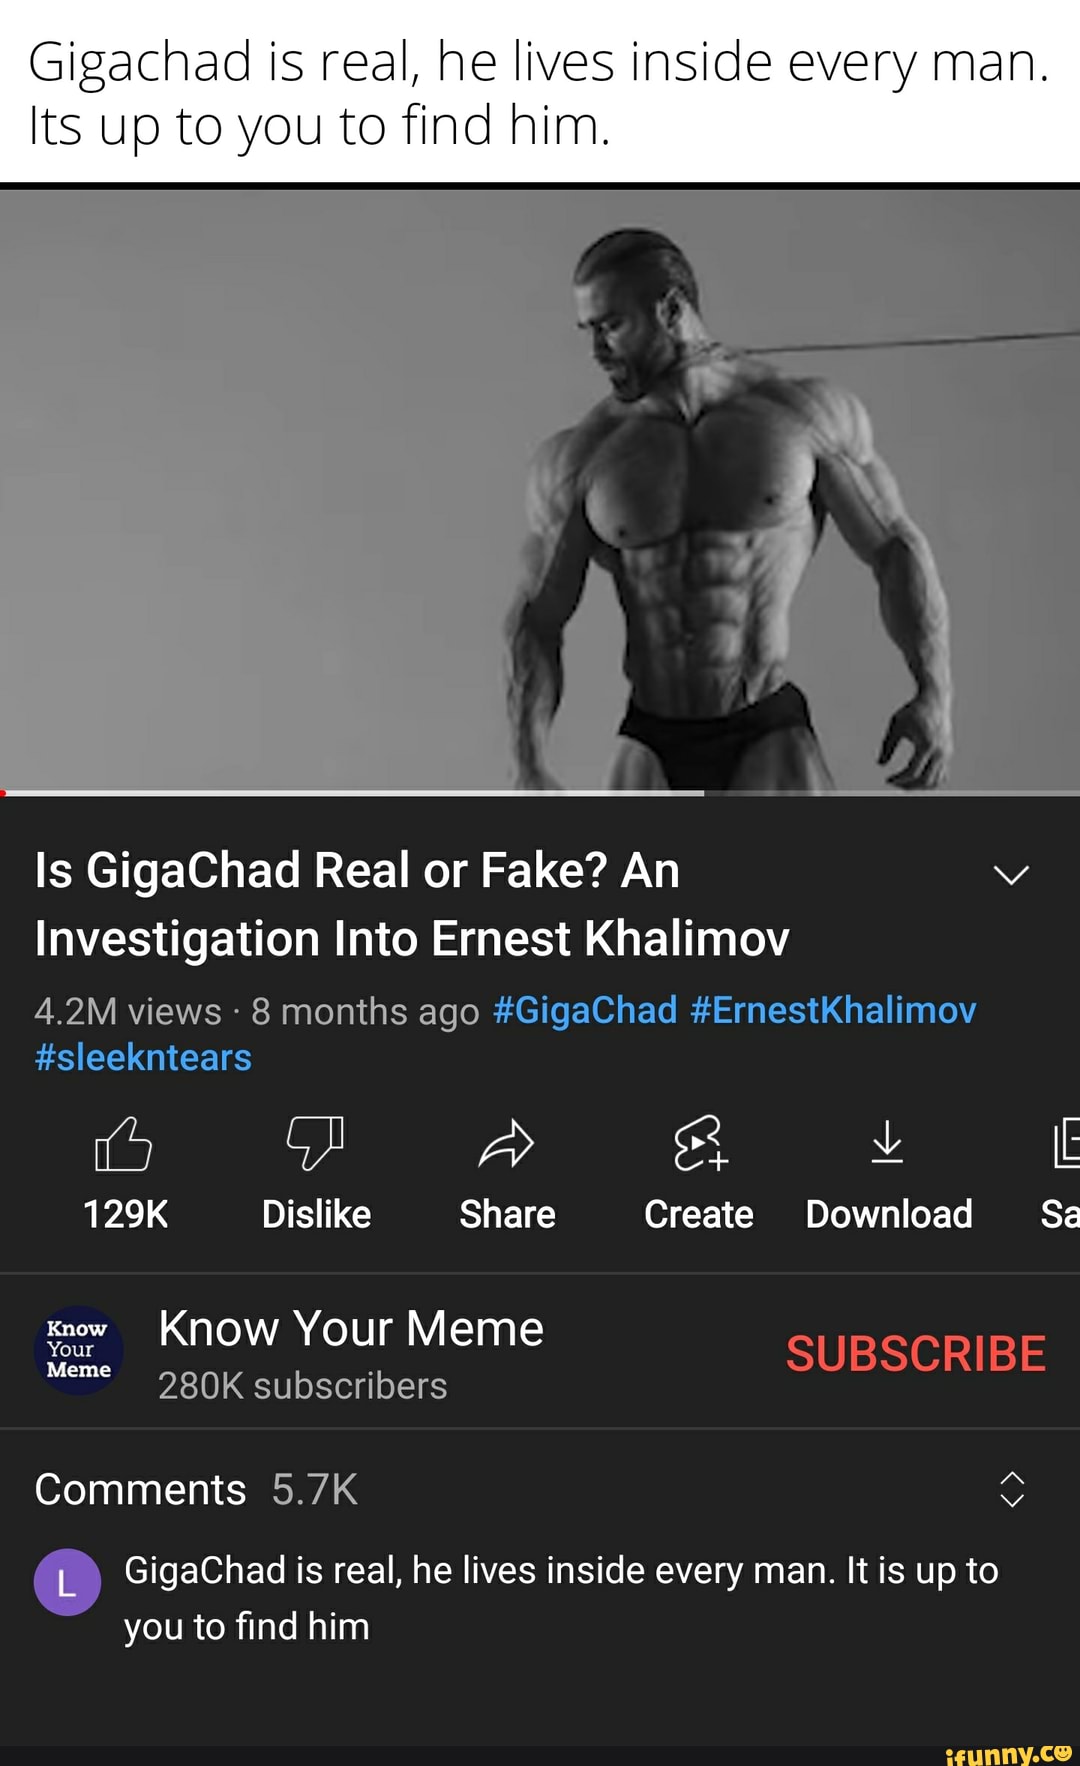 he is real, GigaChad